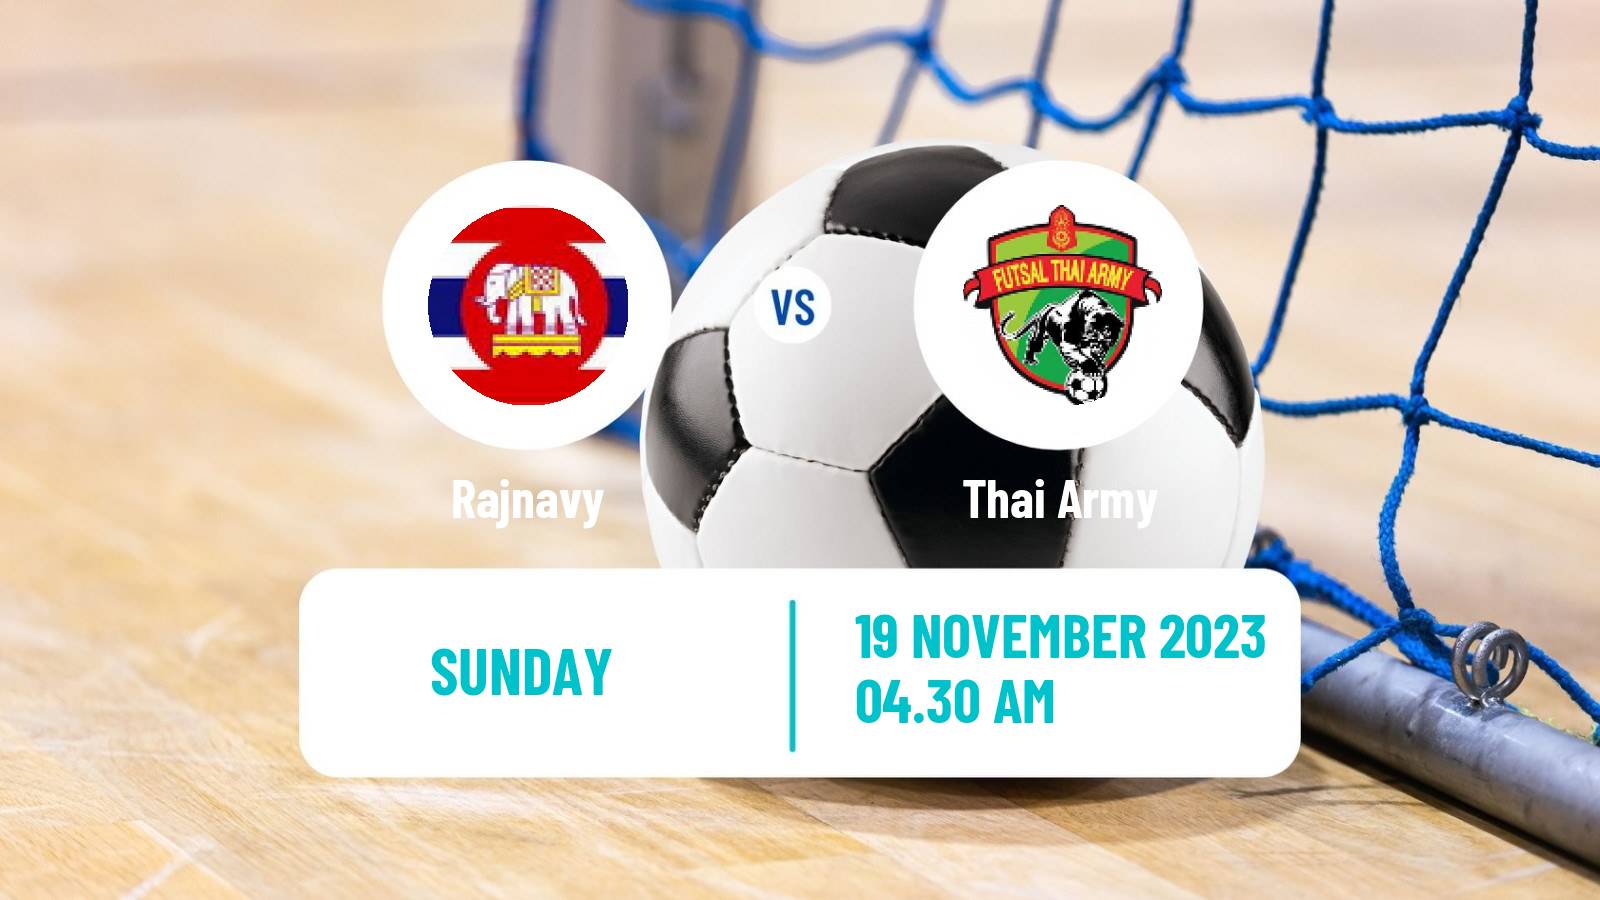 Futsal Thai League Futsal Rajnavy - Thai Army